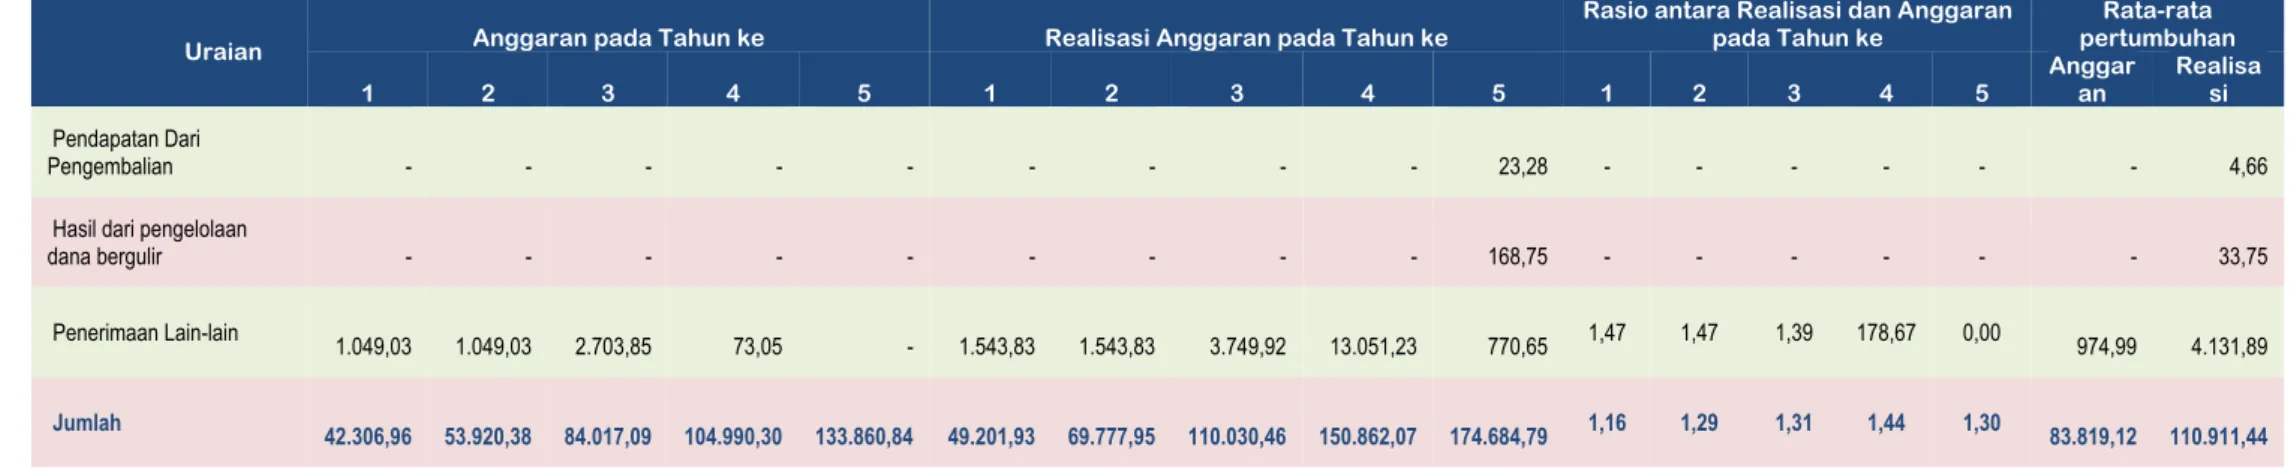 Tabel 2.10  Anggaran dan Realisasi Belanja Daerah Pelayanan DPPKAD Kabupaten Bantul Tahun Anggaran 2011 s/d 2015   (dalam Jutaan Rupiah) 